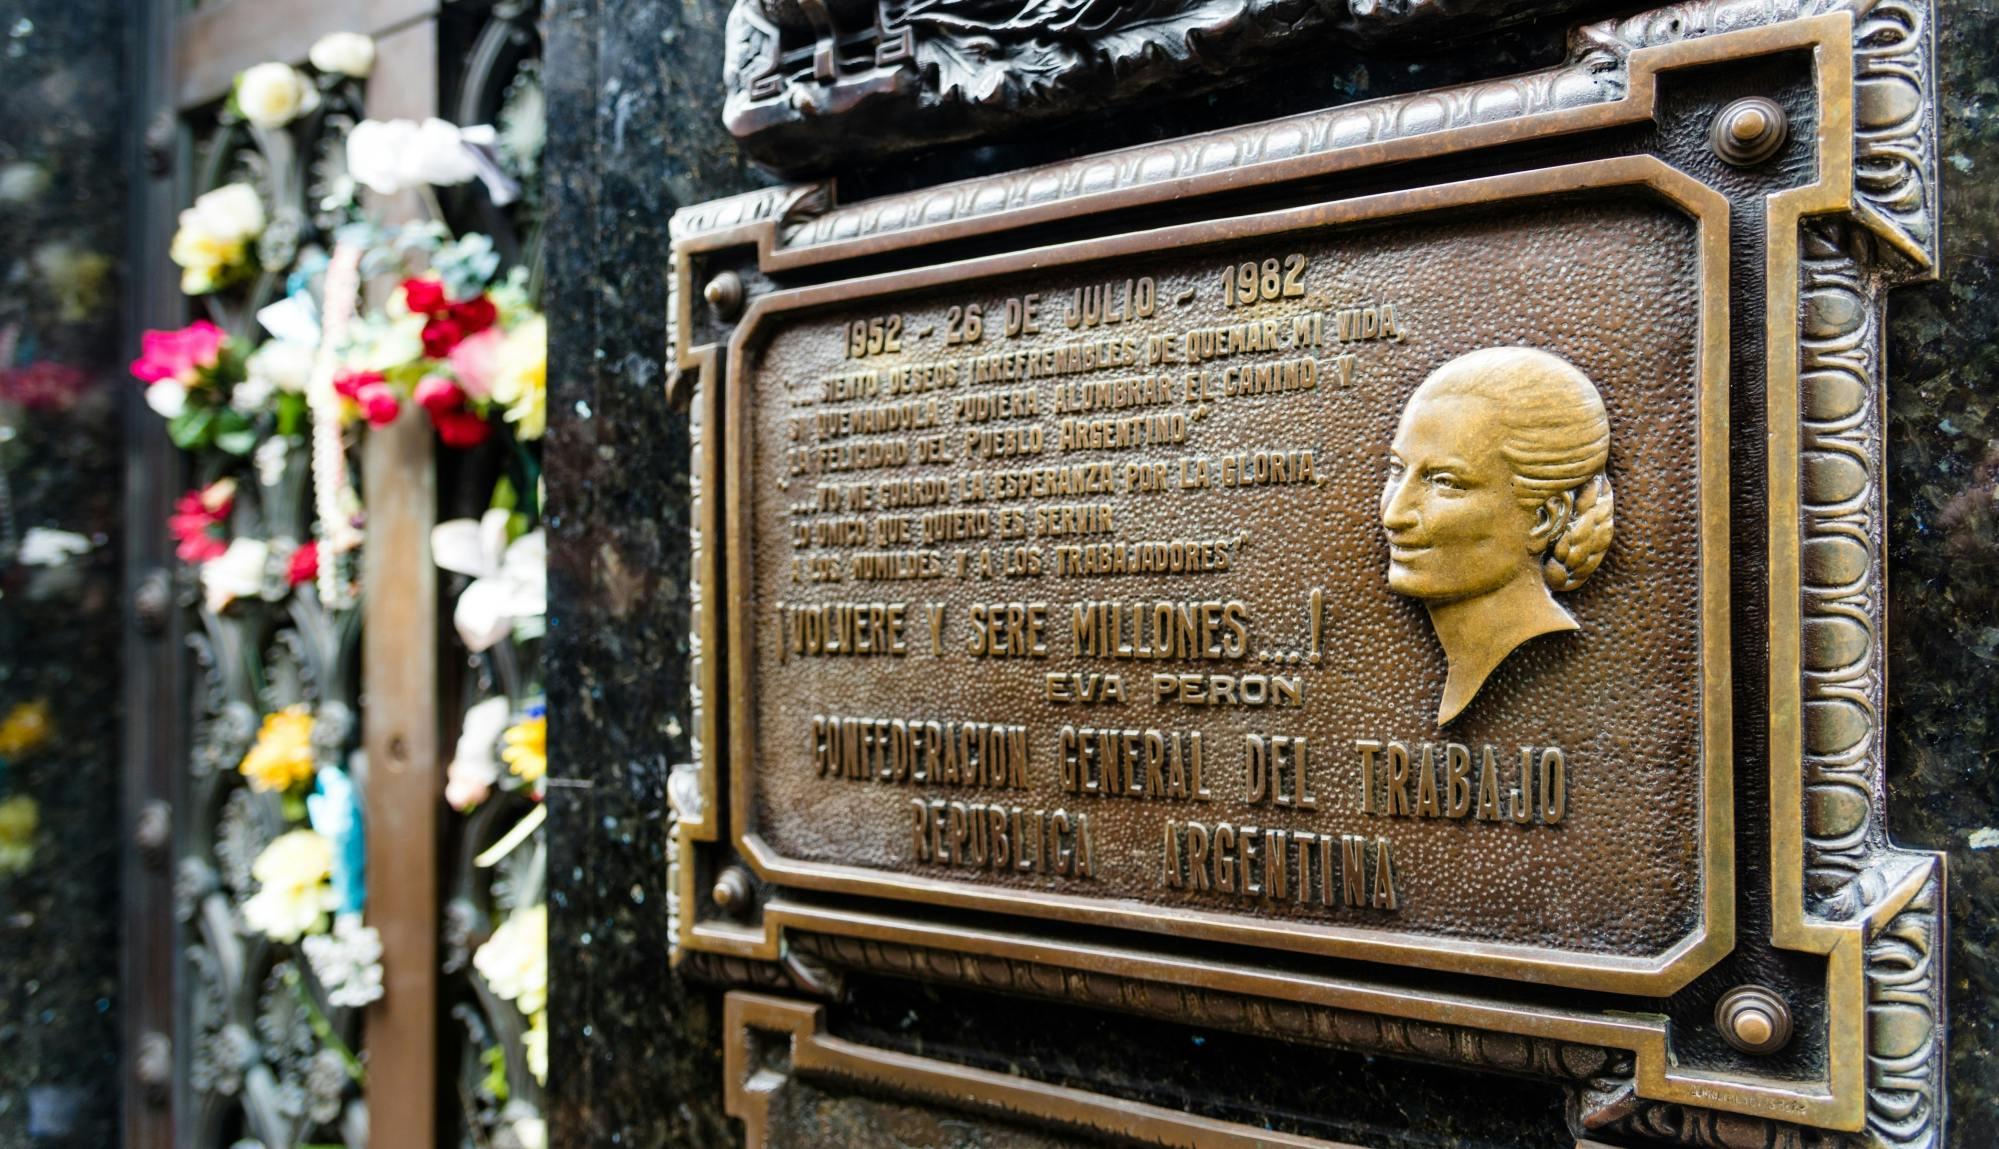 Evita und die private Tour des Peronismus in Buenos Aires